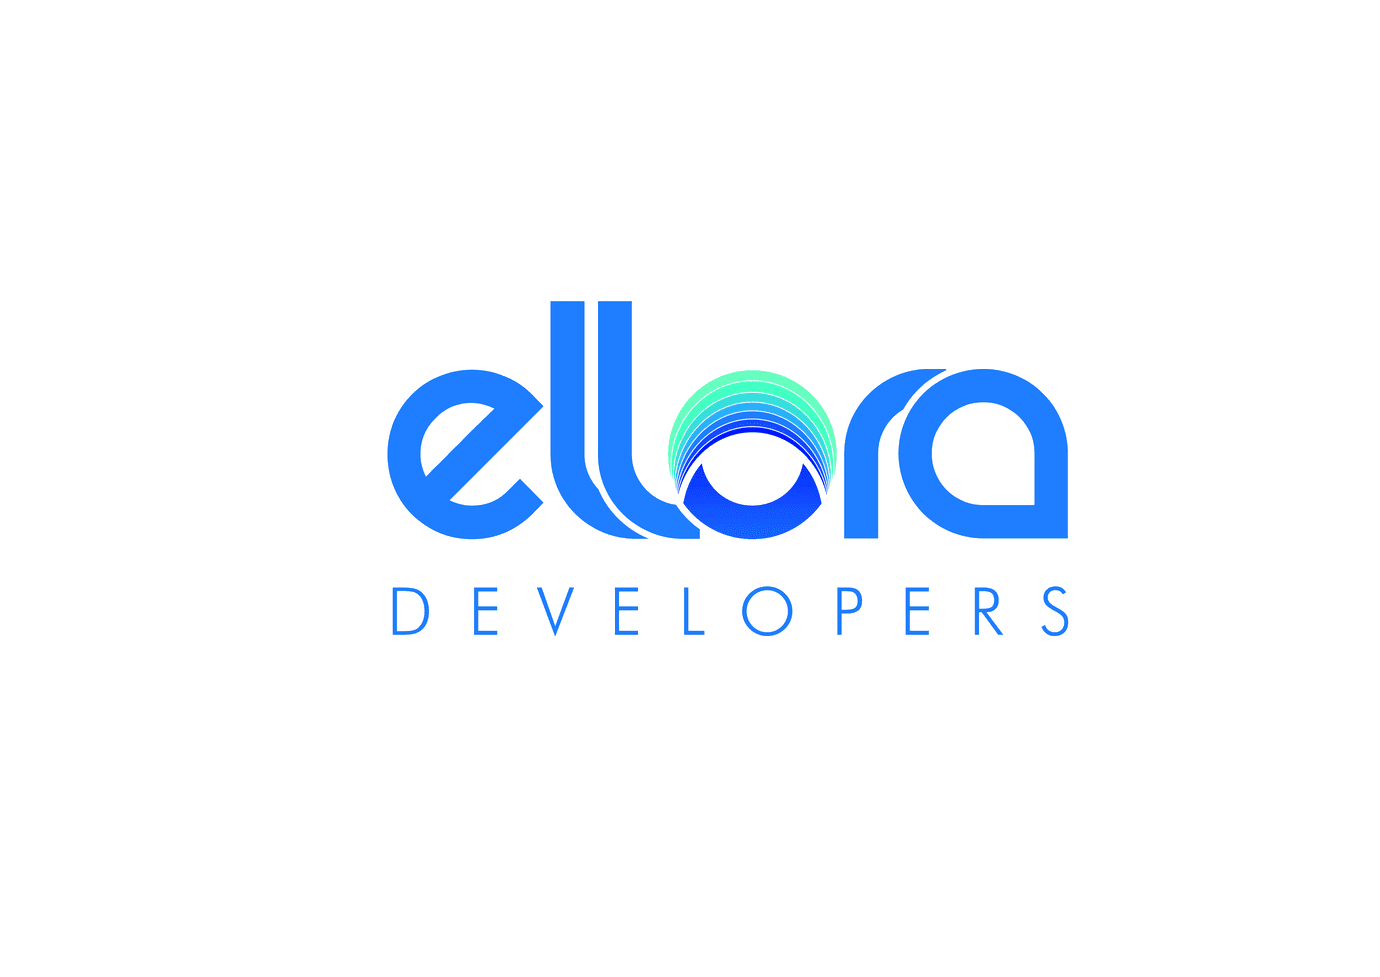 Ellora Developers